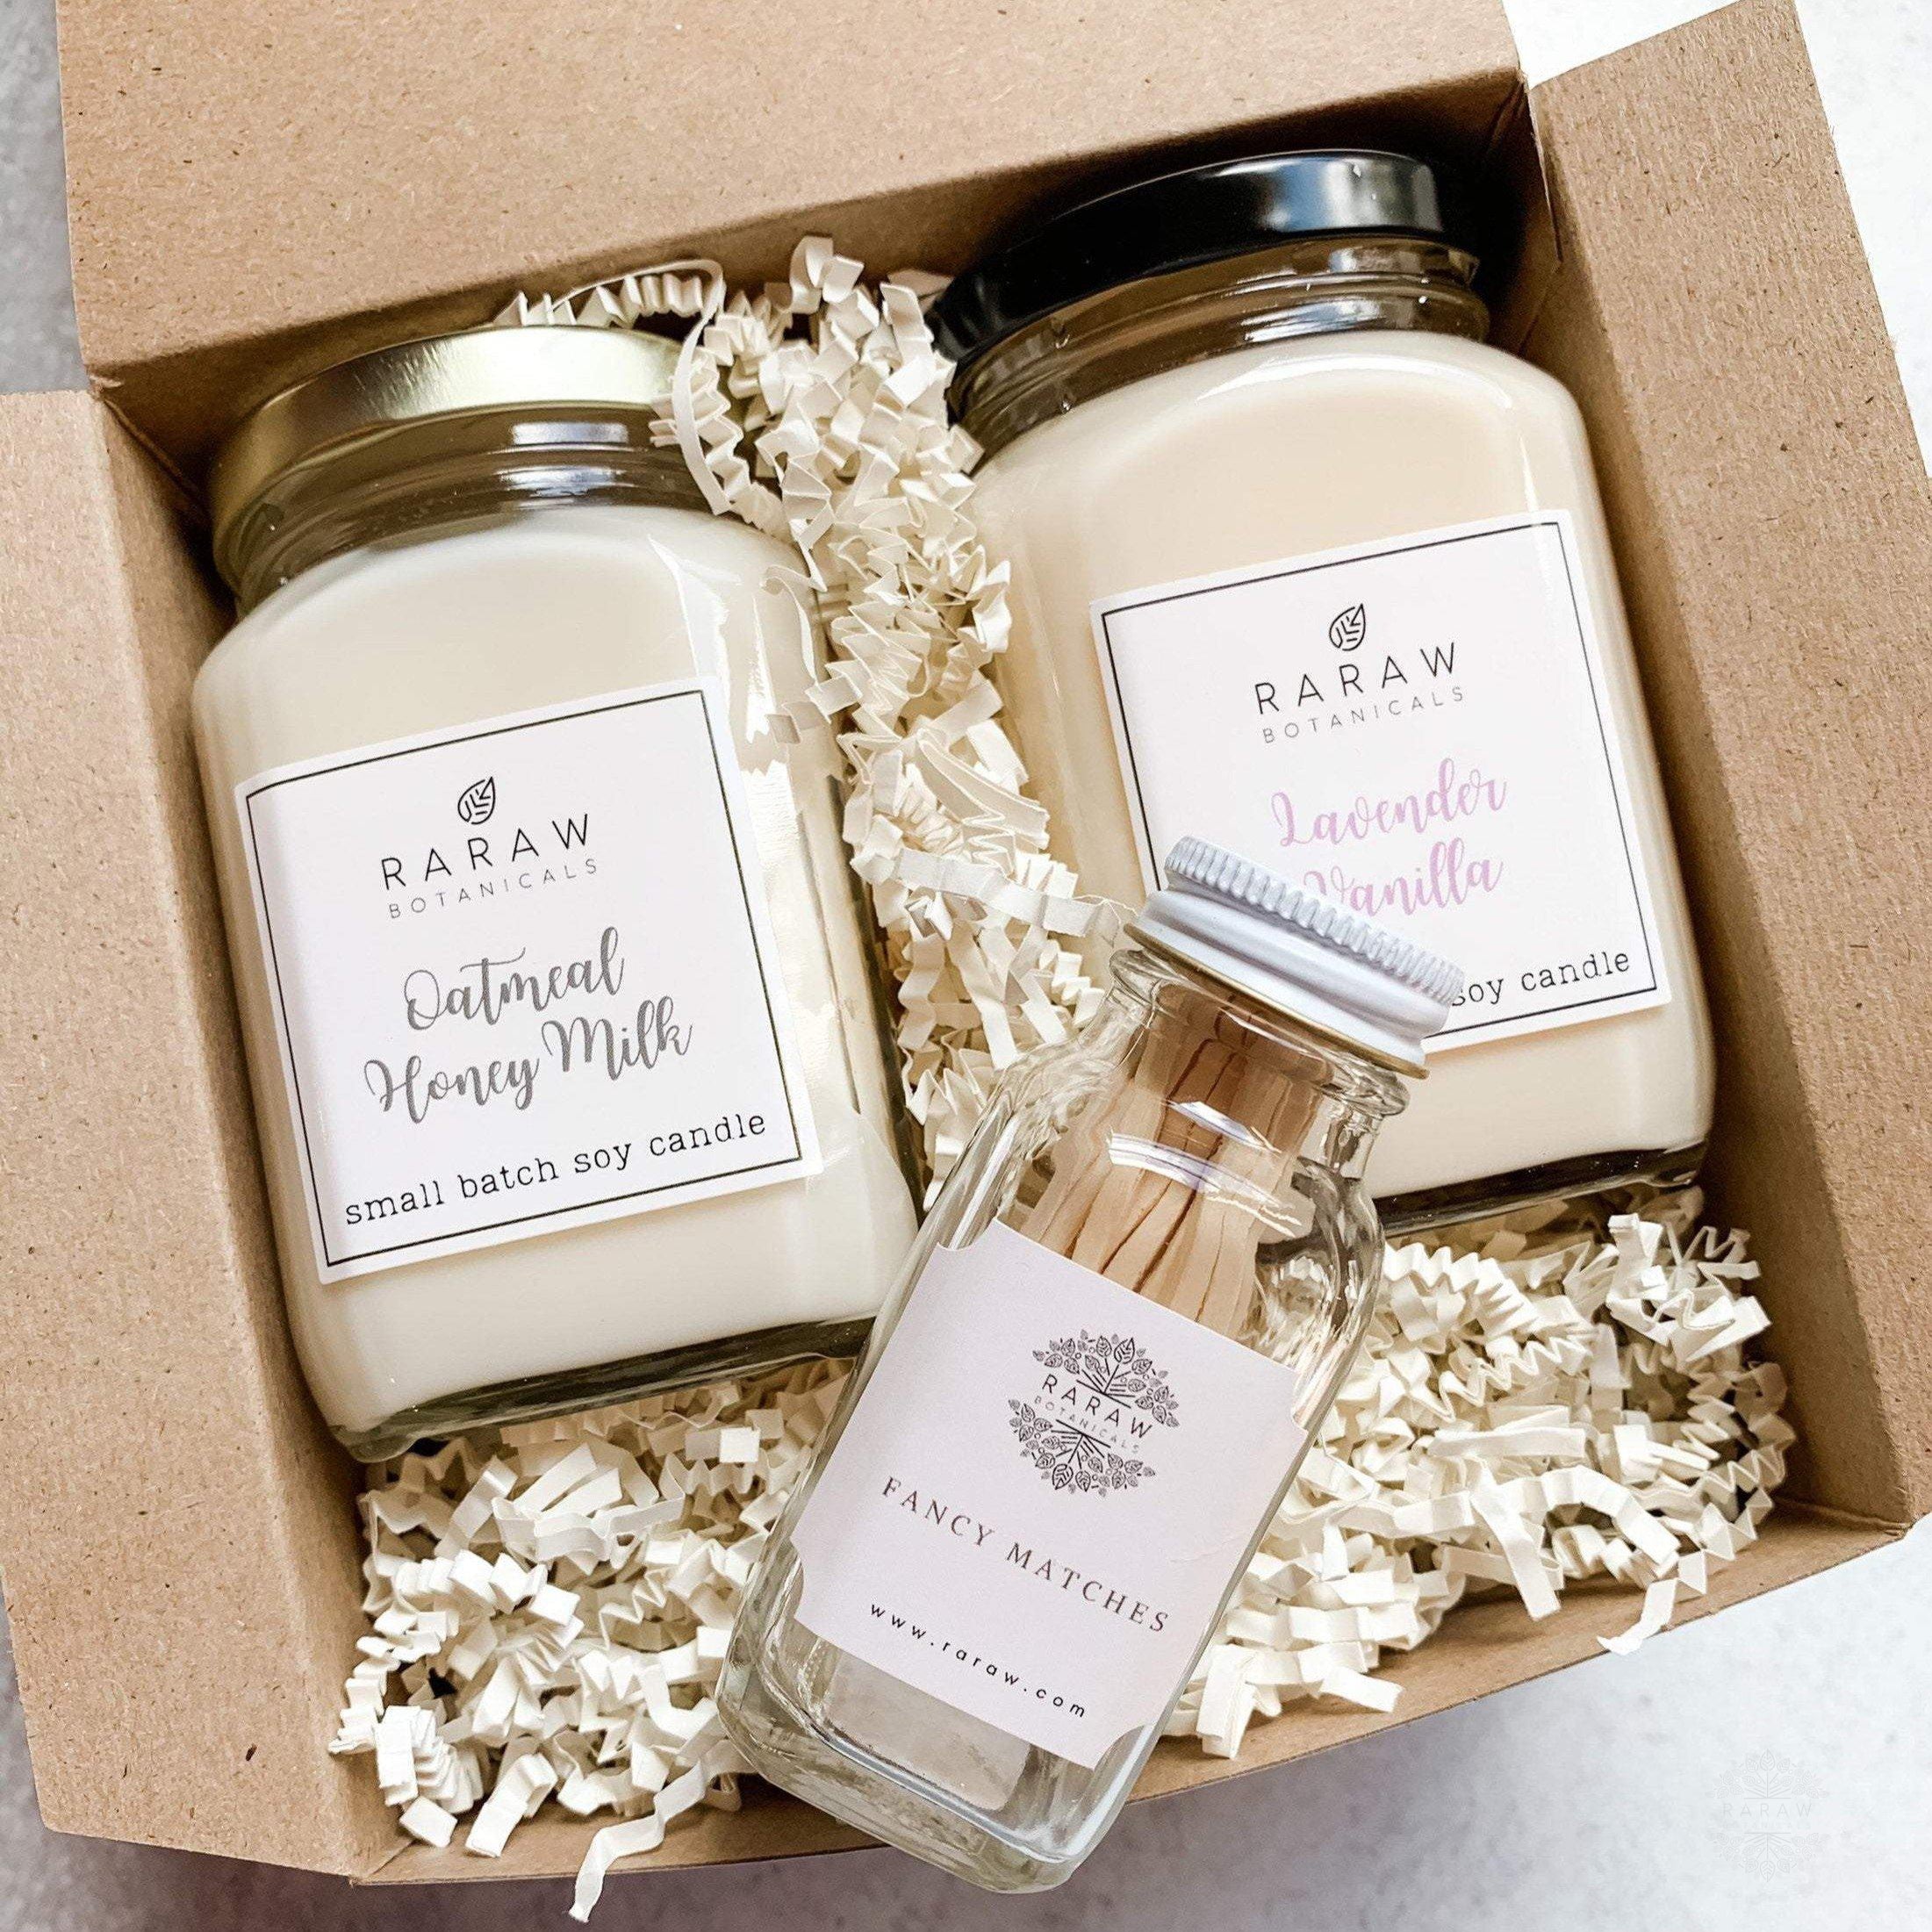 2 candle gift set - pure soy wax - oatmeal honey milk - lavender vanilla